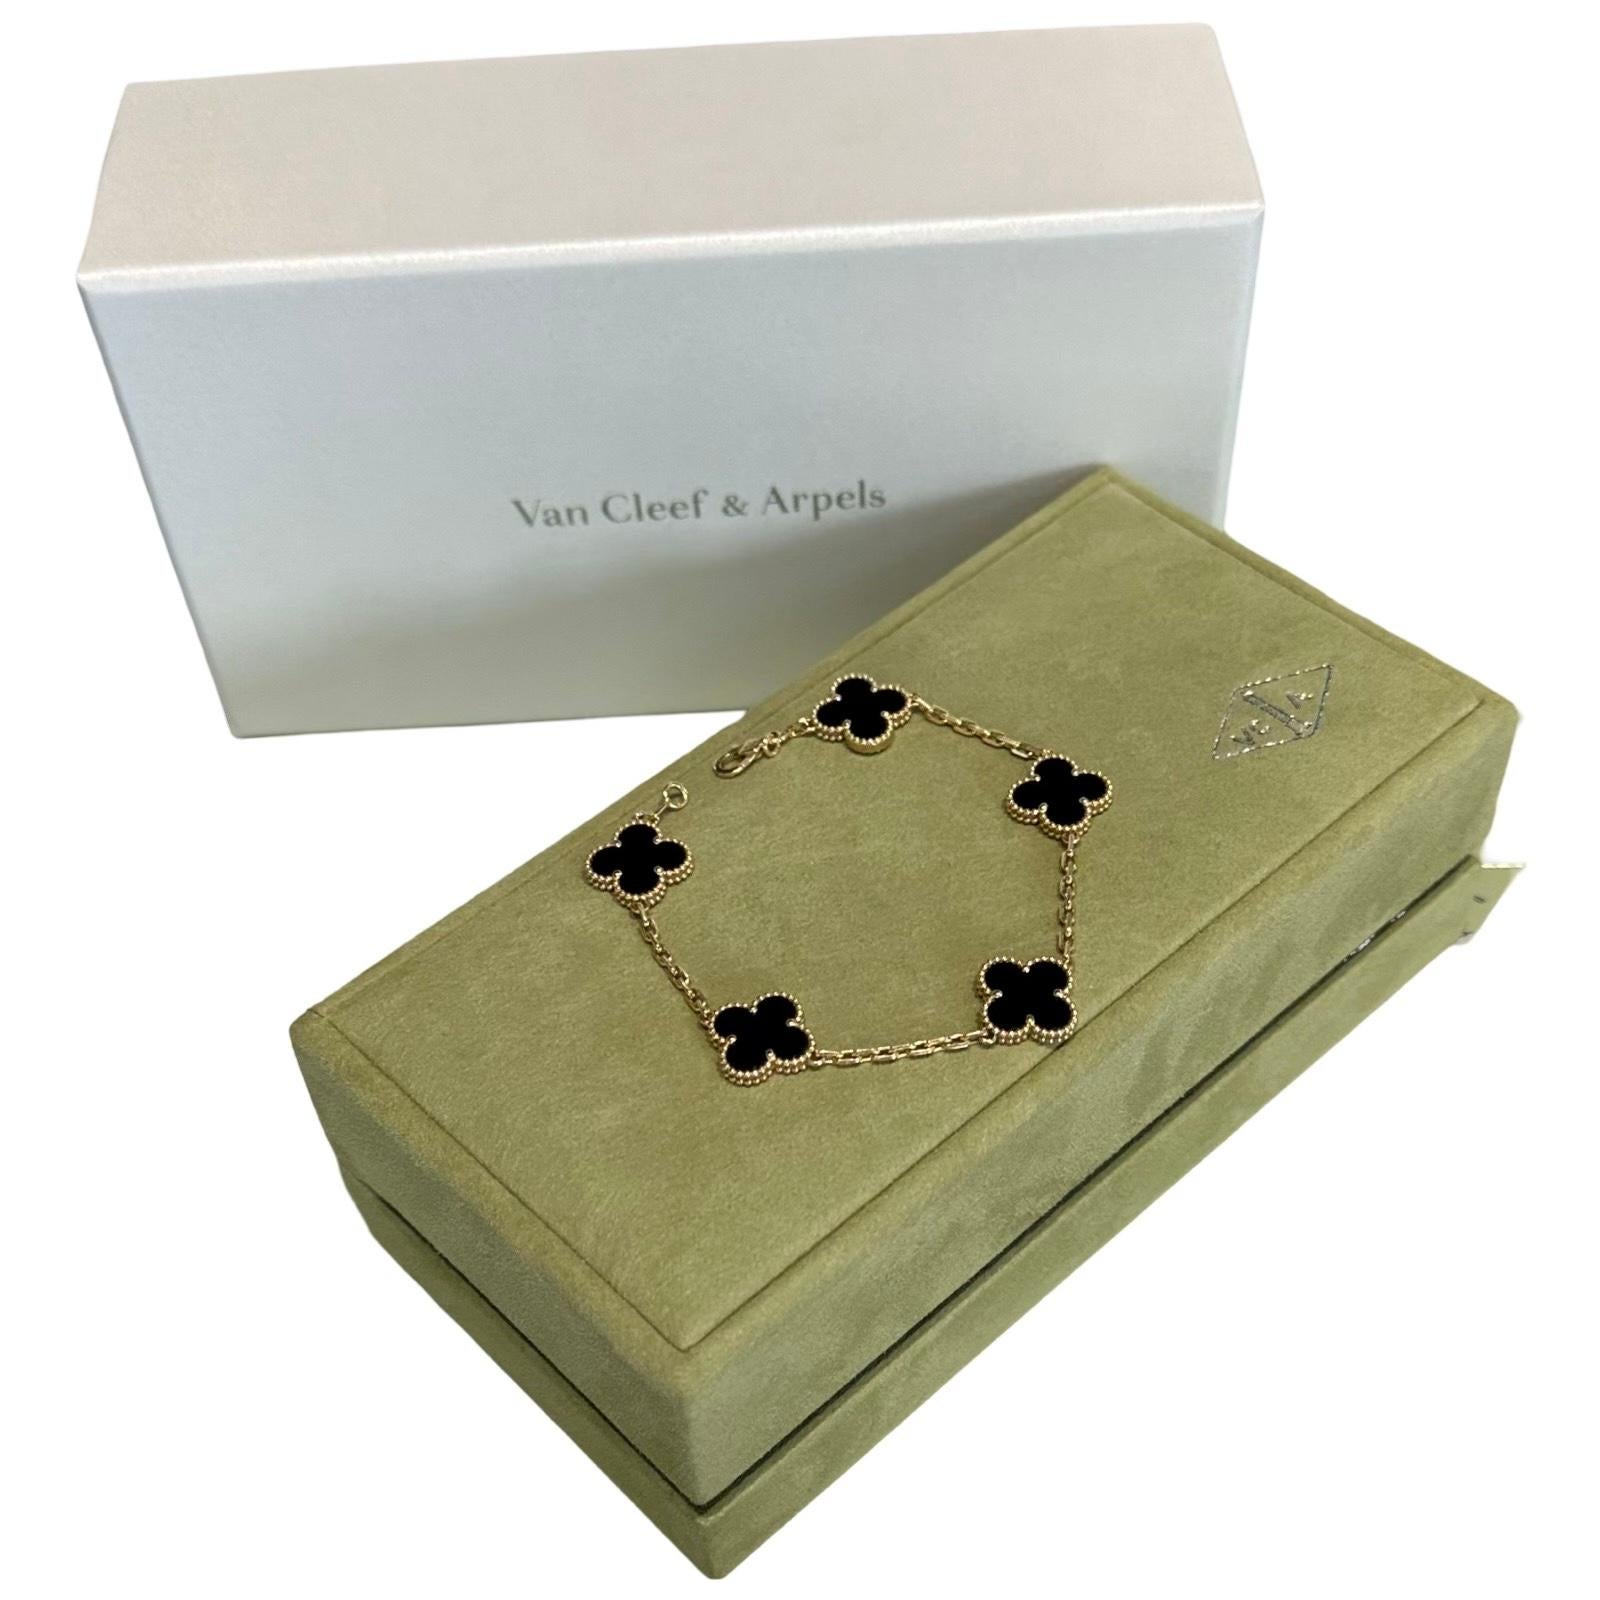 Marke: Van Cleef & Arpels

Modell: Vintage Alhambra Armbänder

Stein: Onyx

Metall: 18k Gelbgold

Enthält: VCA-Box
                VCA-Echtheitszertifikat